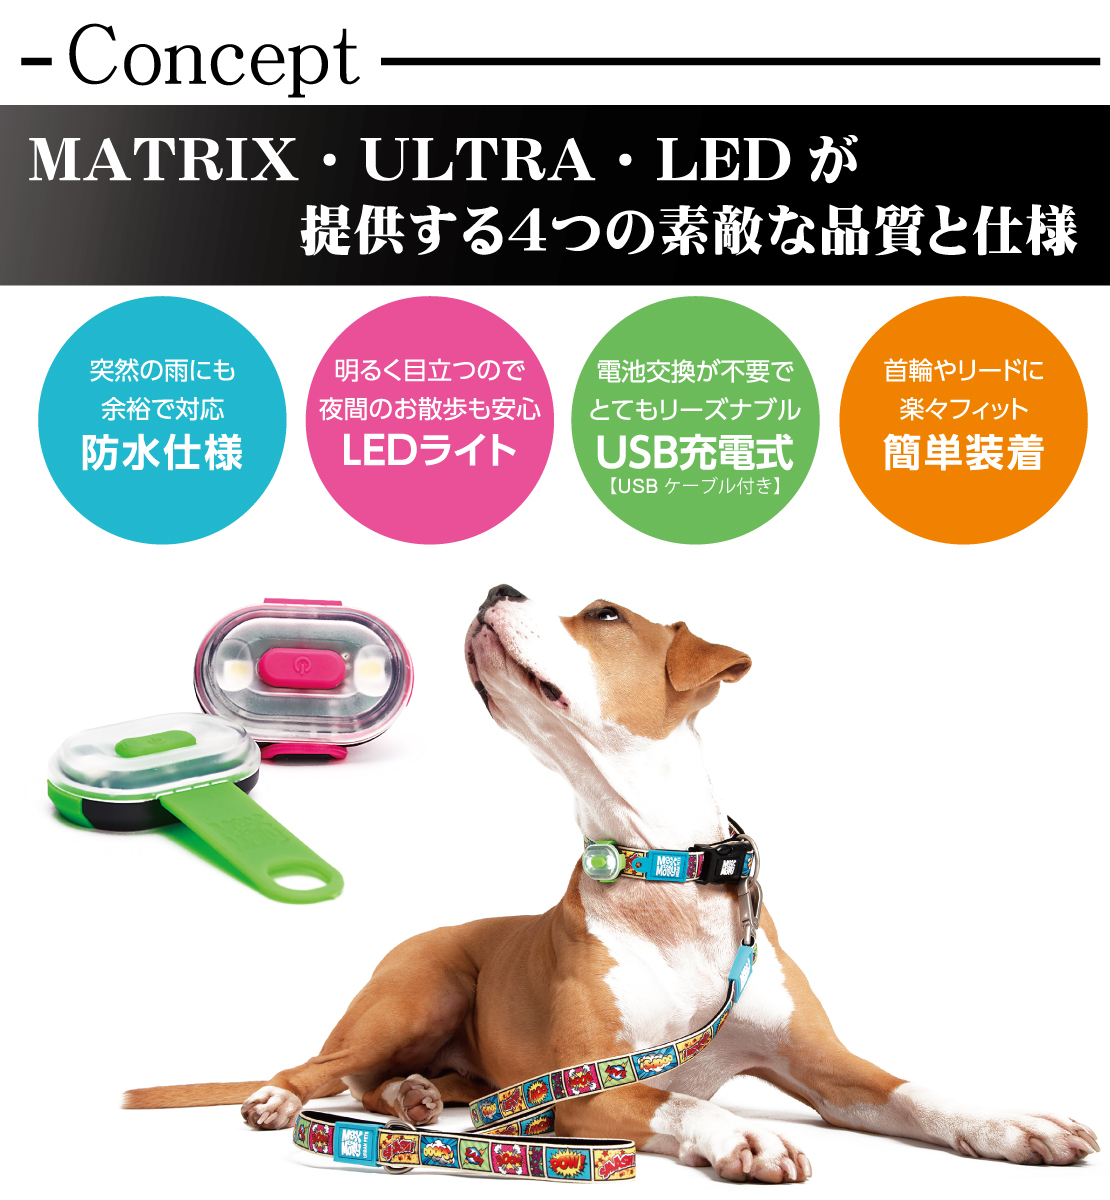 MATRIX・ULTRA・LEDが提供する４つの素敵な品質と仕様